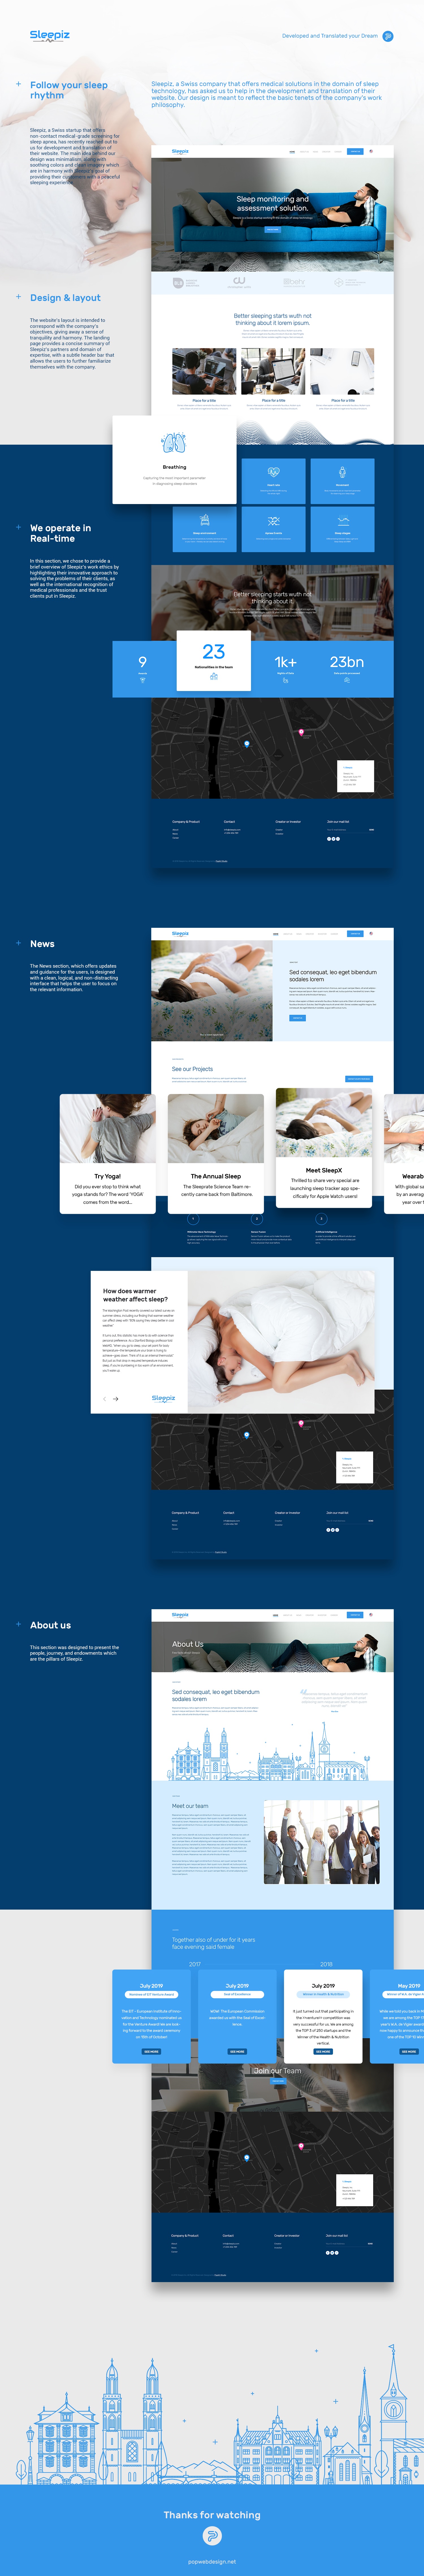 Sleepiz website design presentation